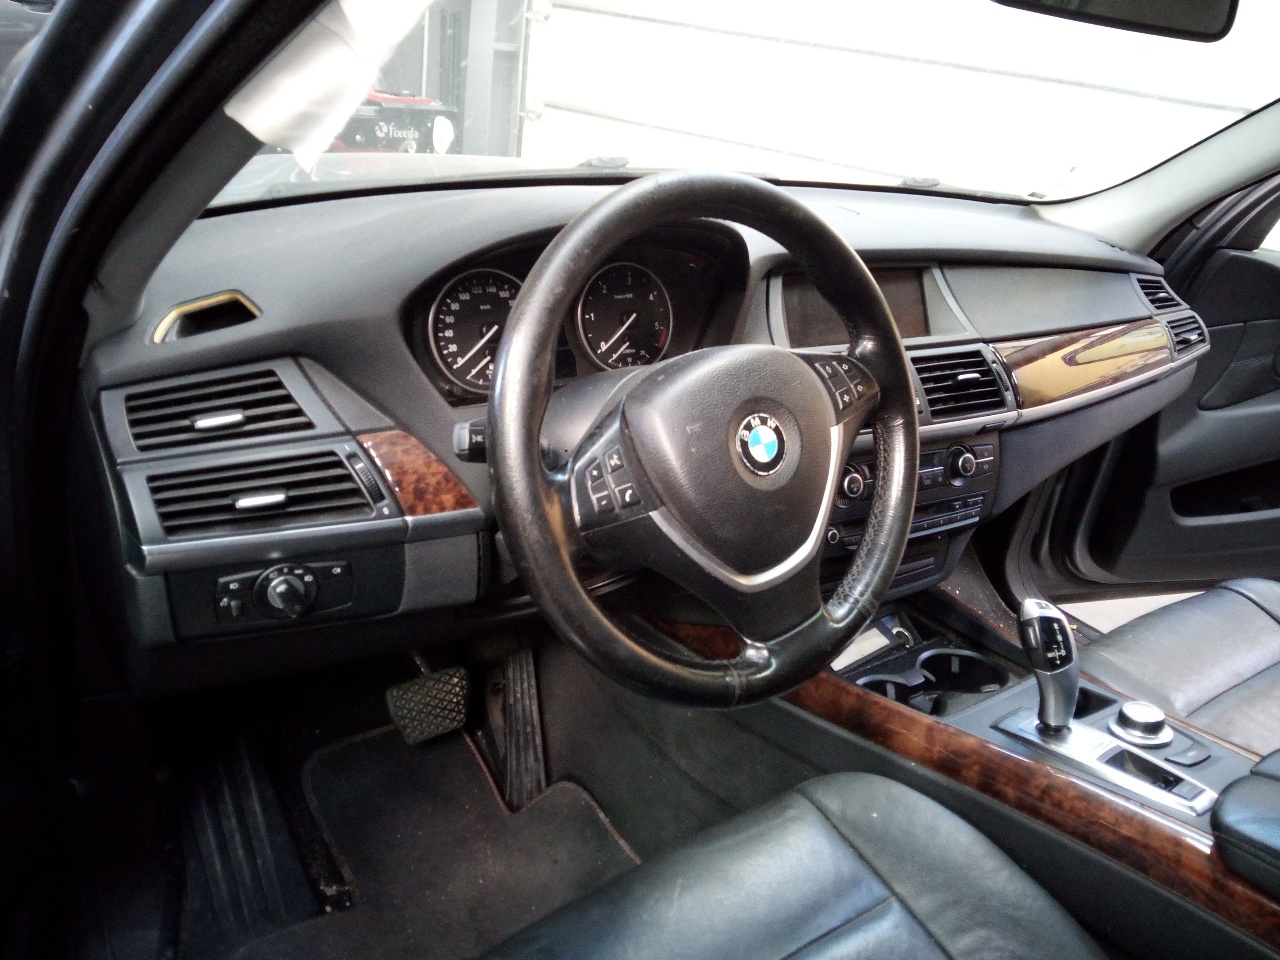 BMW X6 E71/E72 (2008-2012) Gearbox Short Propshaft 7556019, 15893410, P1-B6-19 23293598